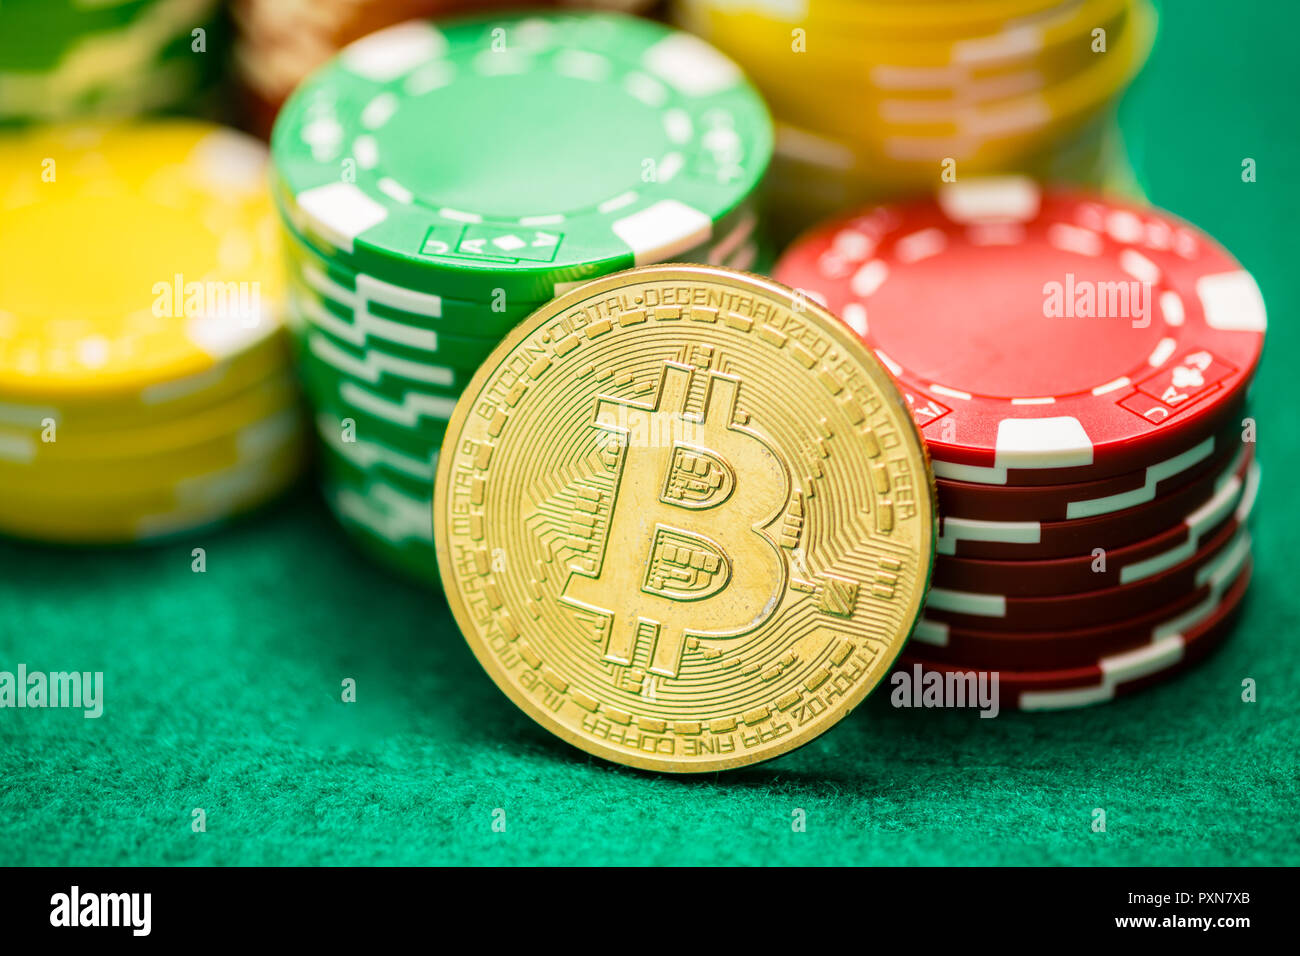 Top 10 Bitcoin Gambling Accounts To Follow On Twitter